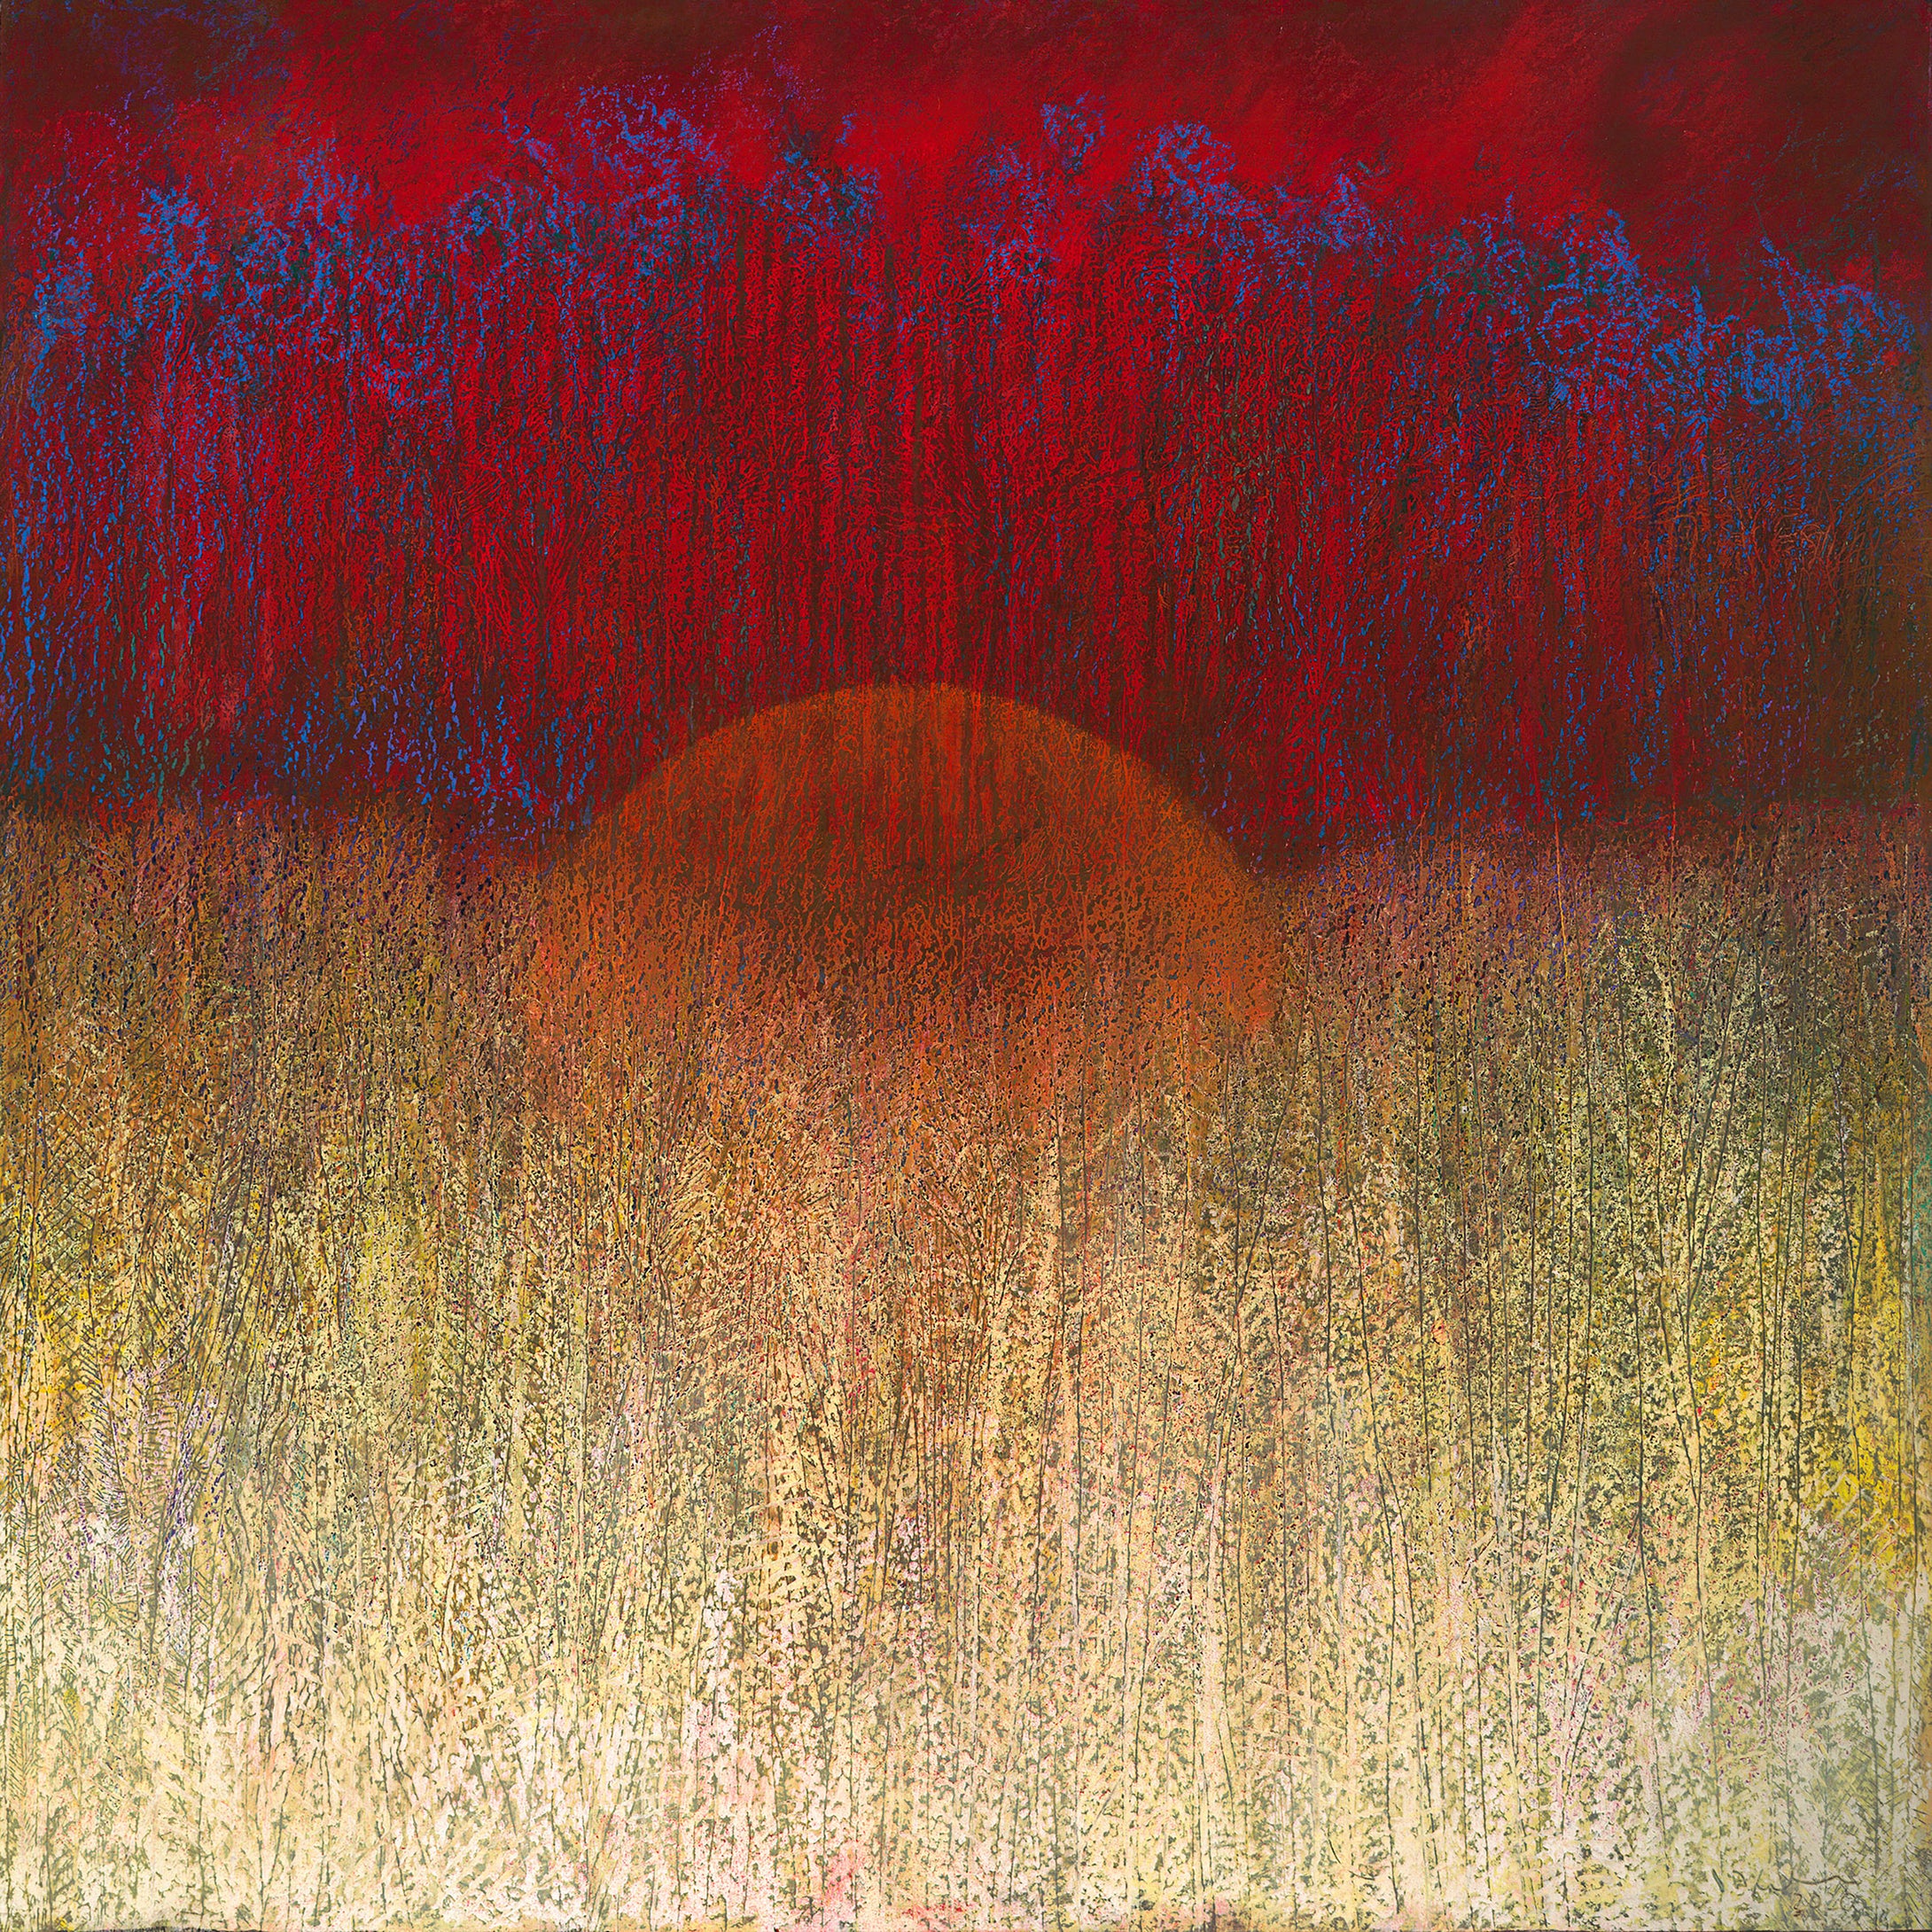 Doug Lawler: Moon in Grass